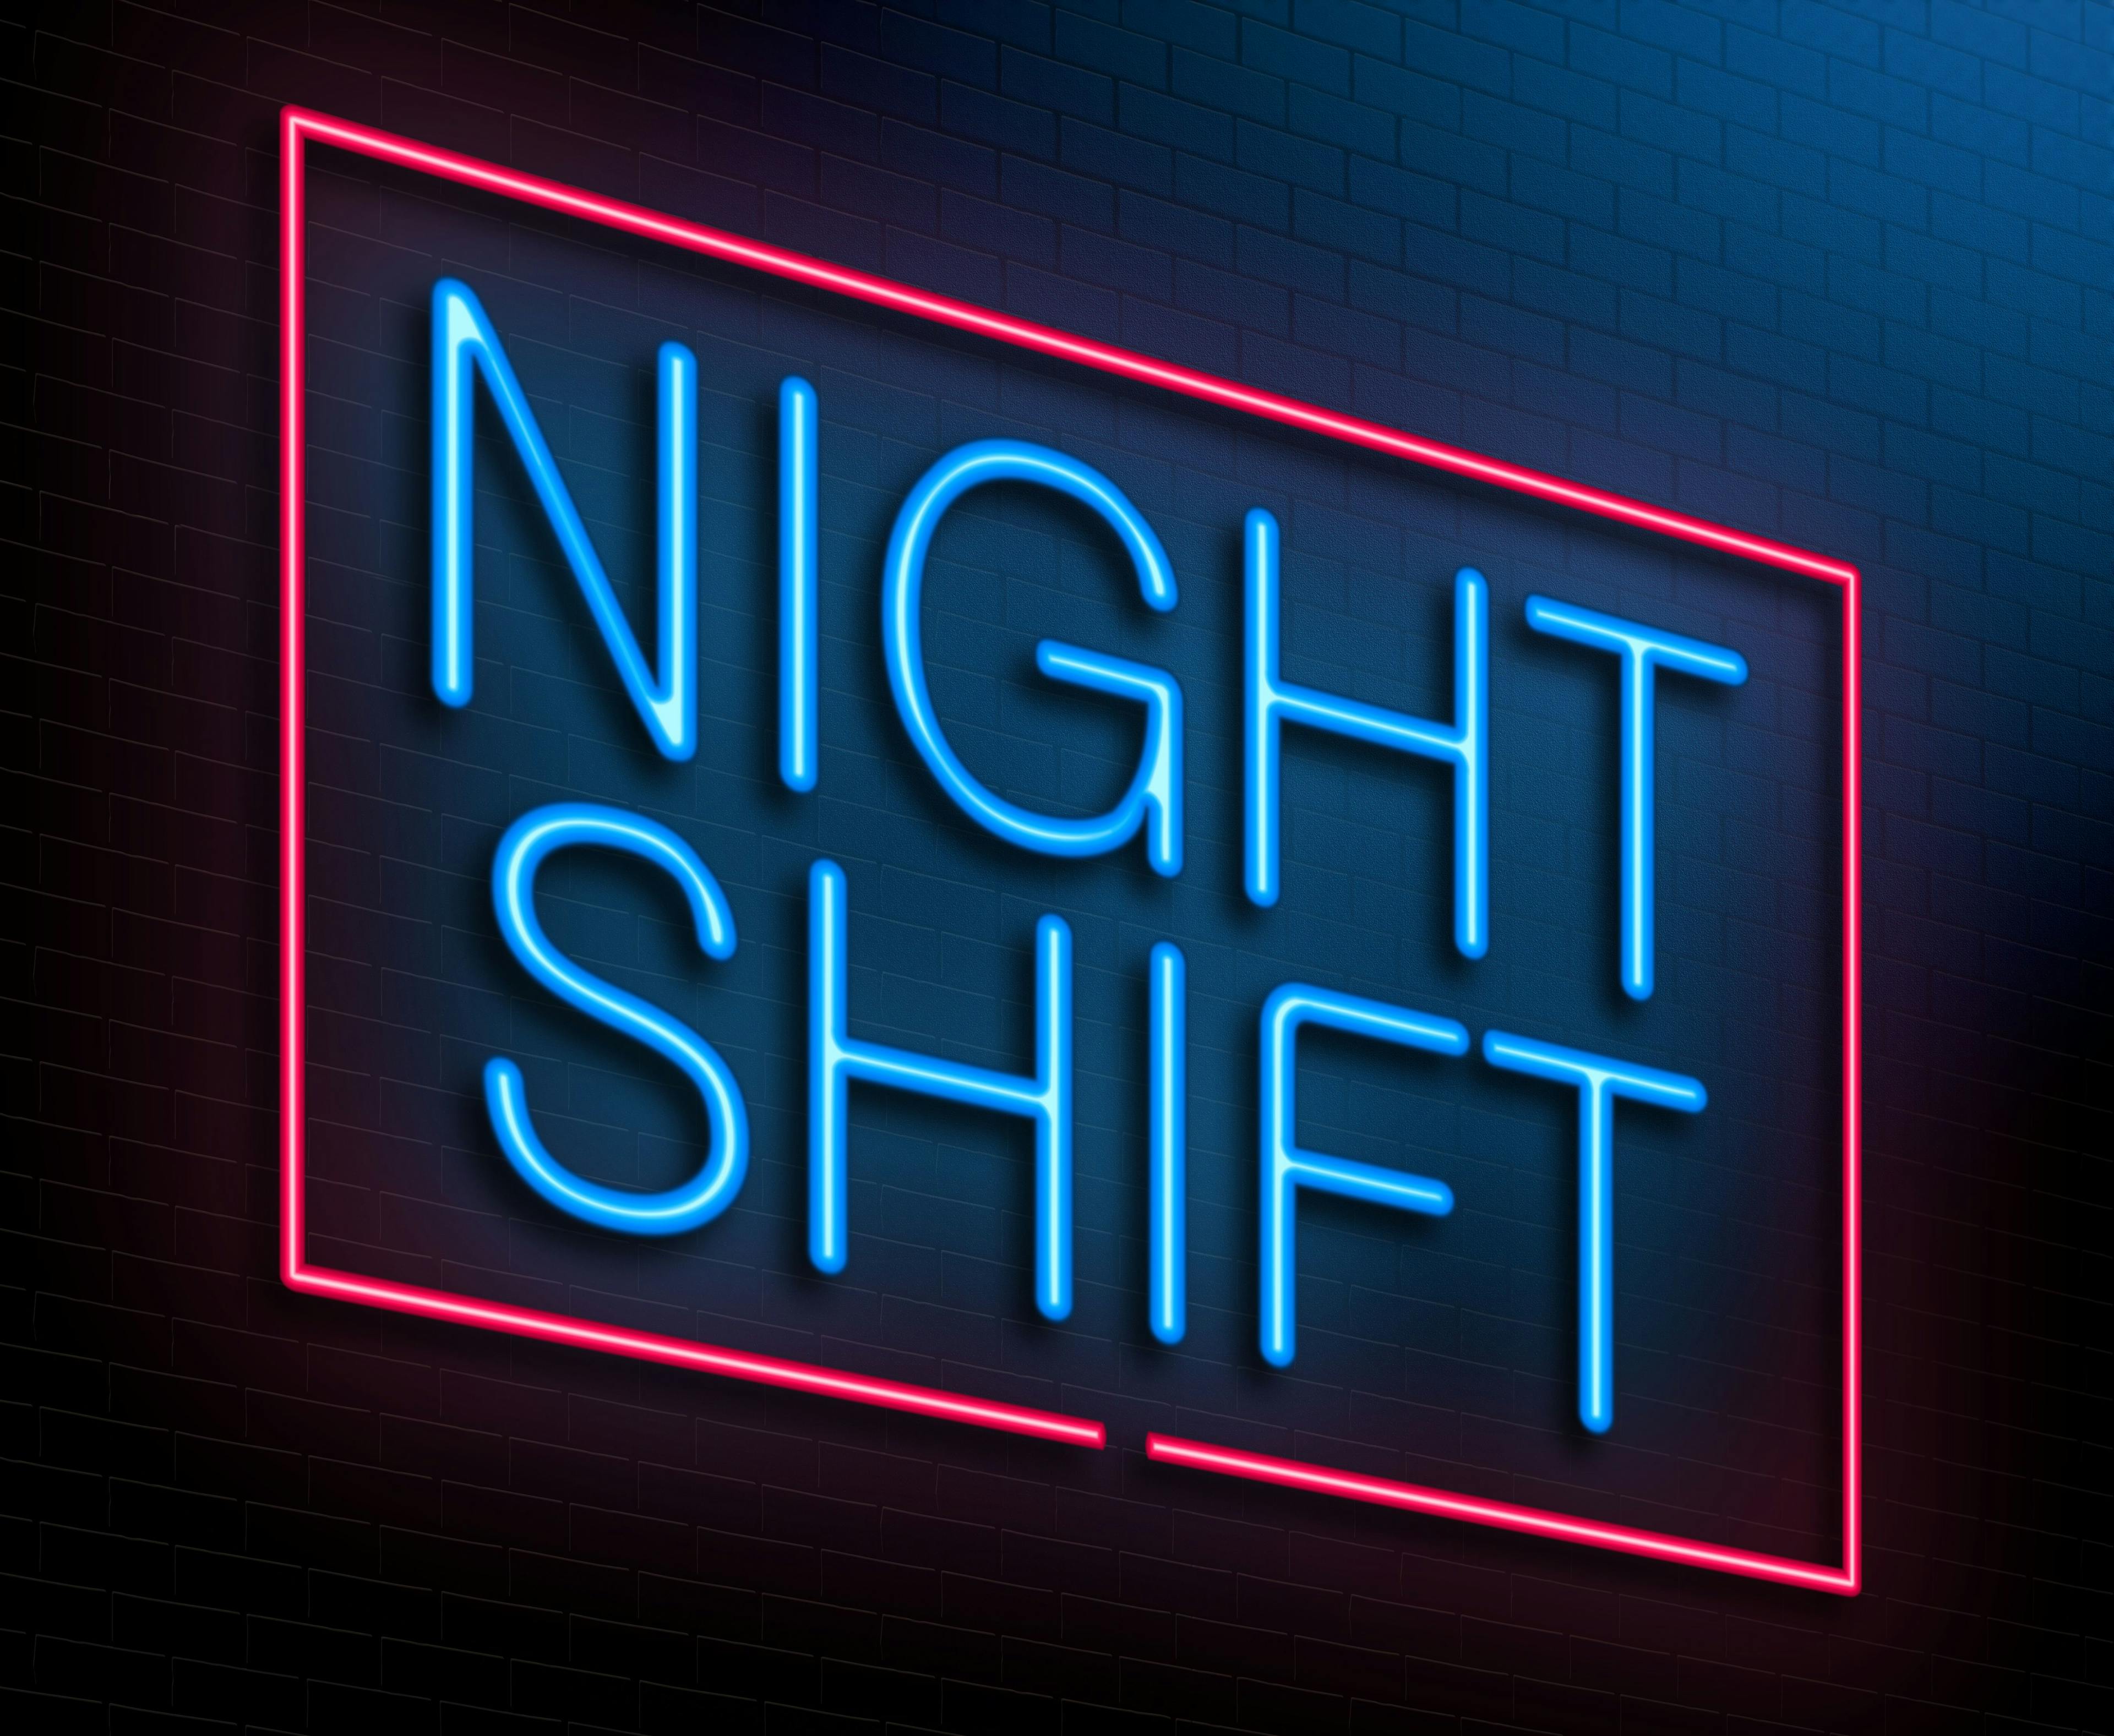 Night shift | Image Credit: creative soul - stock.adobe.com